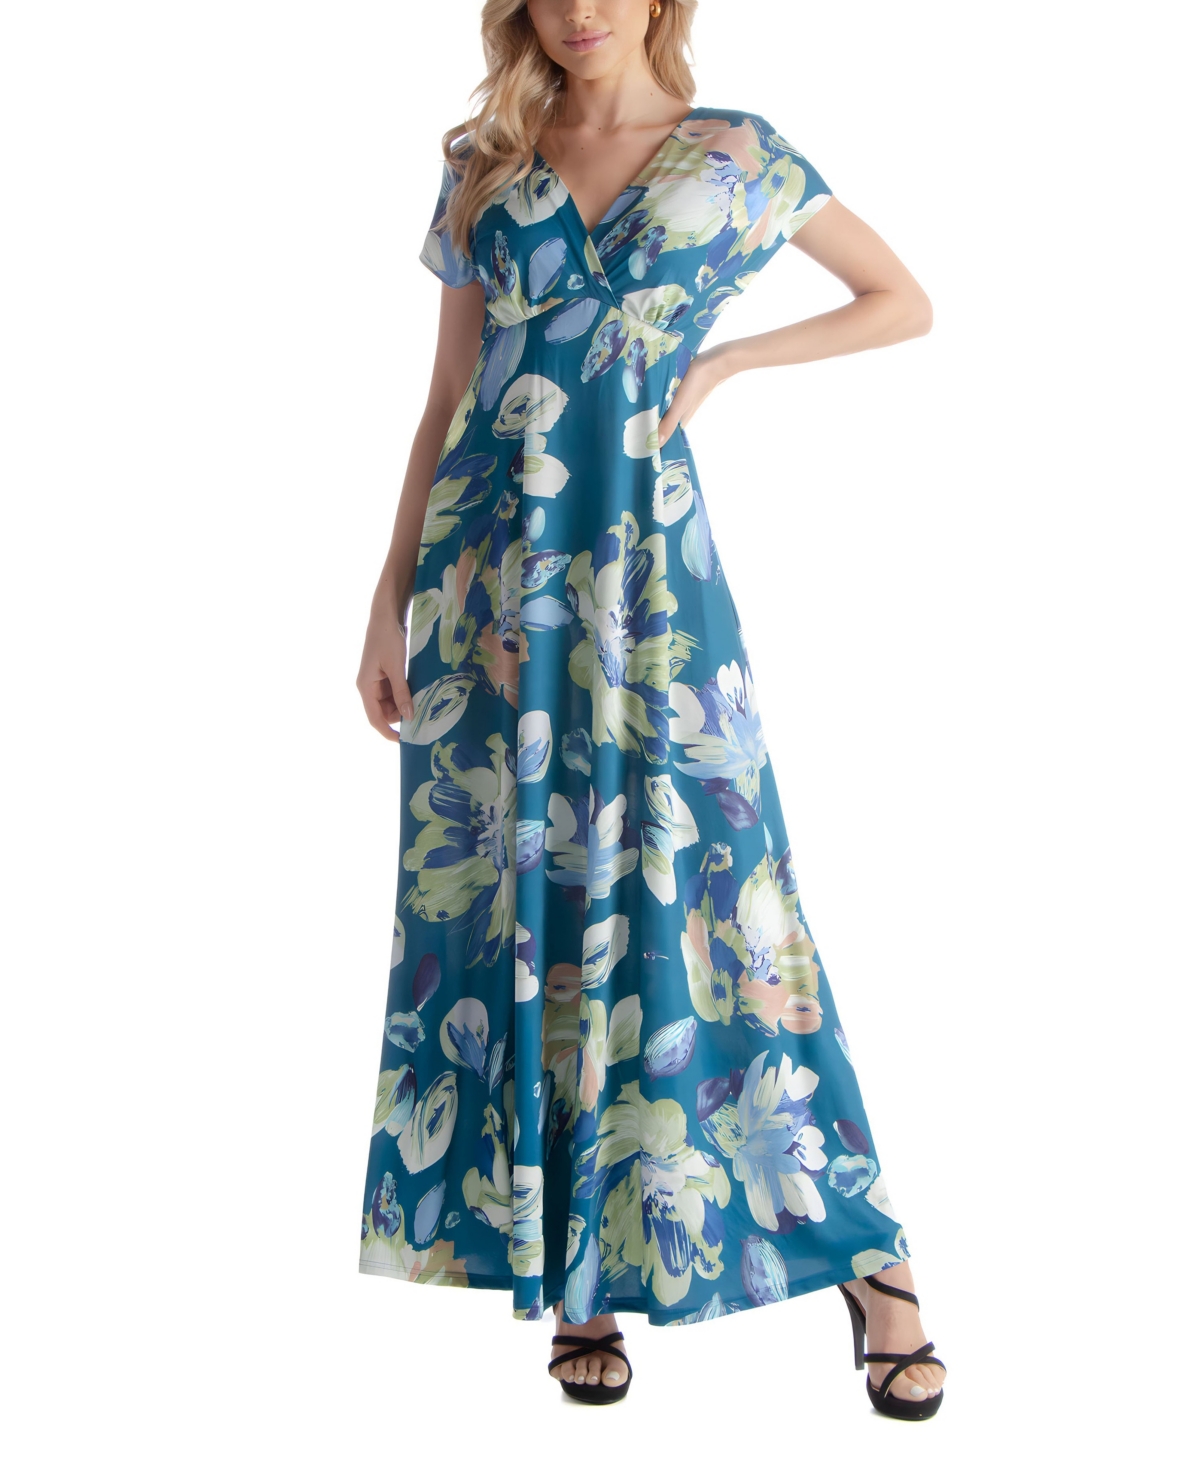 24seven Comfort Apparel Women's V-neck Cap Sleeved Empire Waist Maxi Dress In Blue Multi